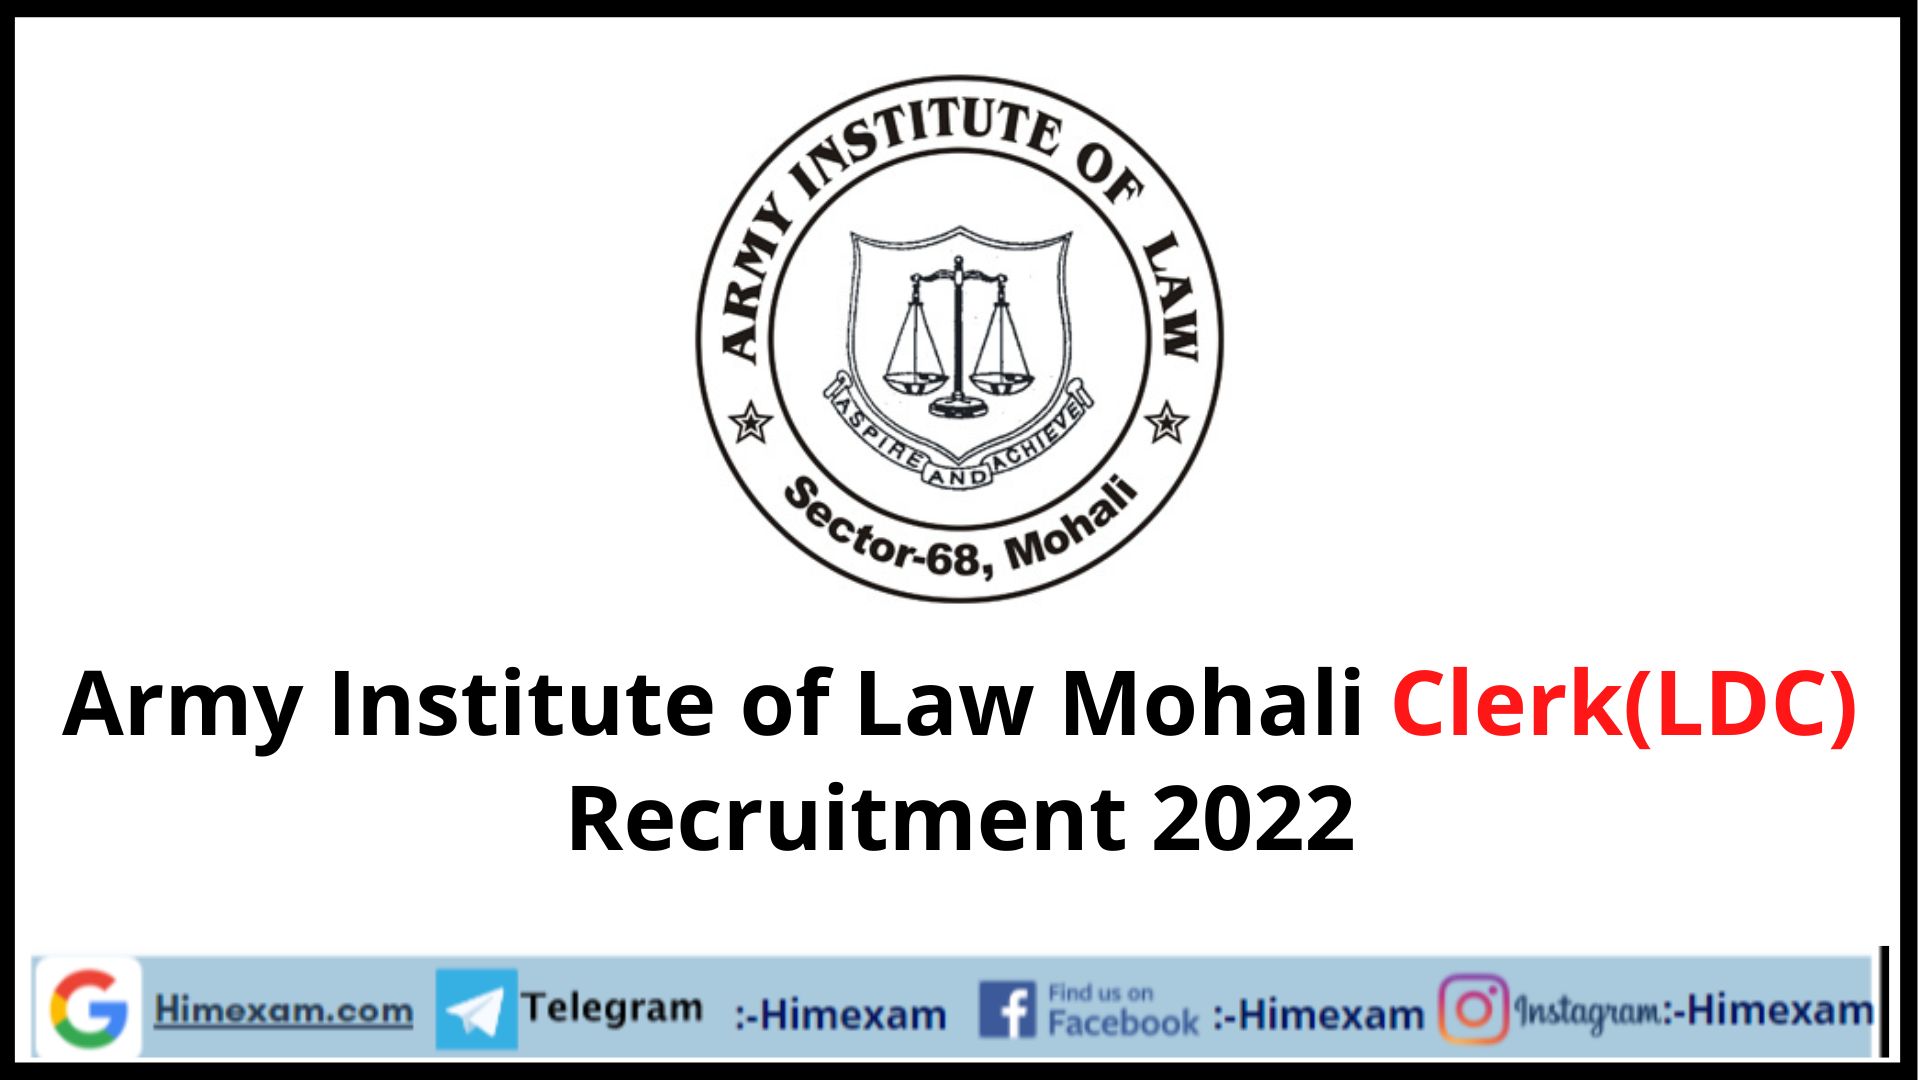 Army Institute of Law Mohali Clerk(LDC) Recruitment 2022